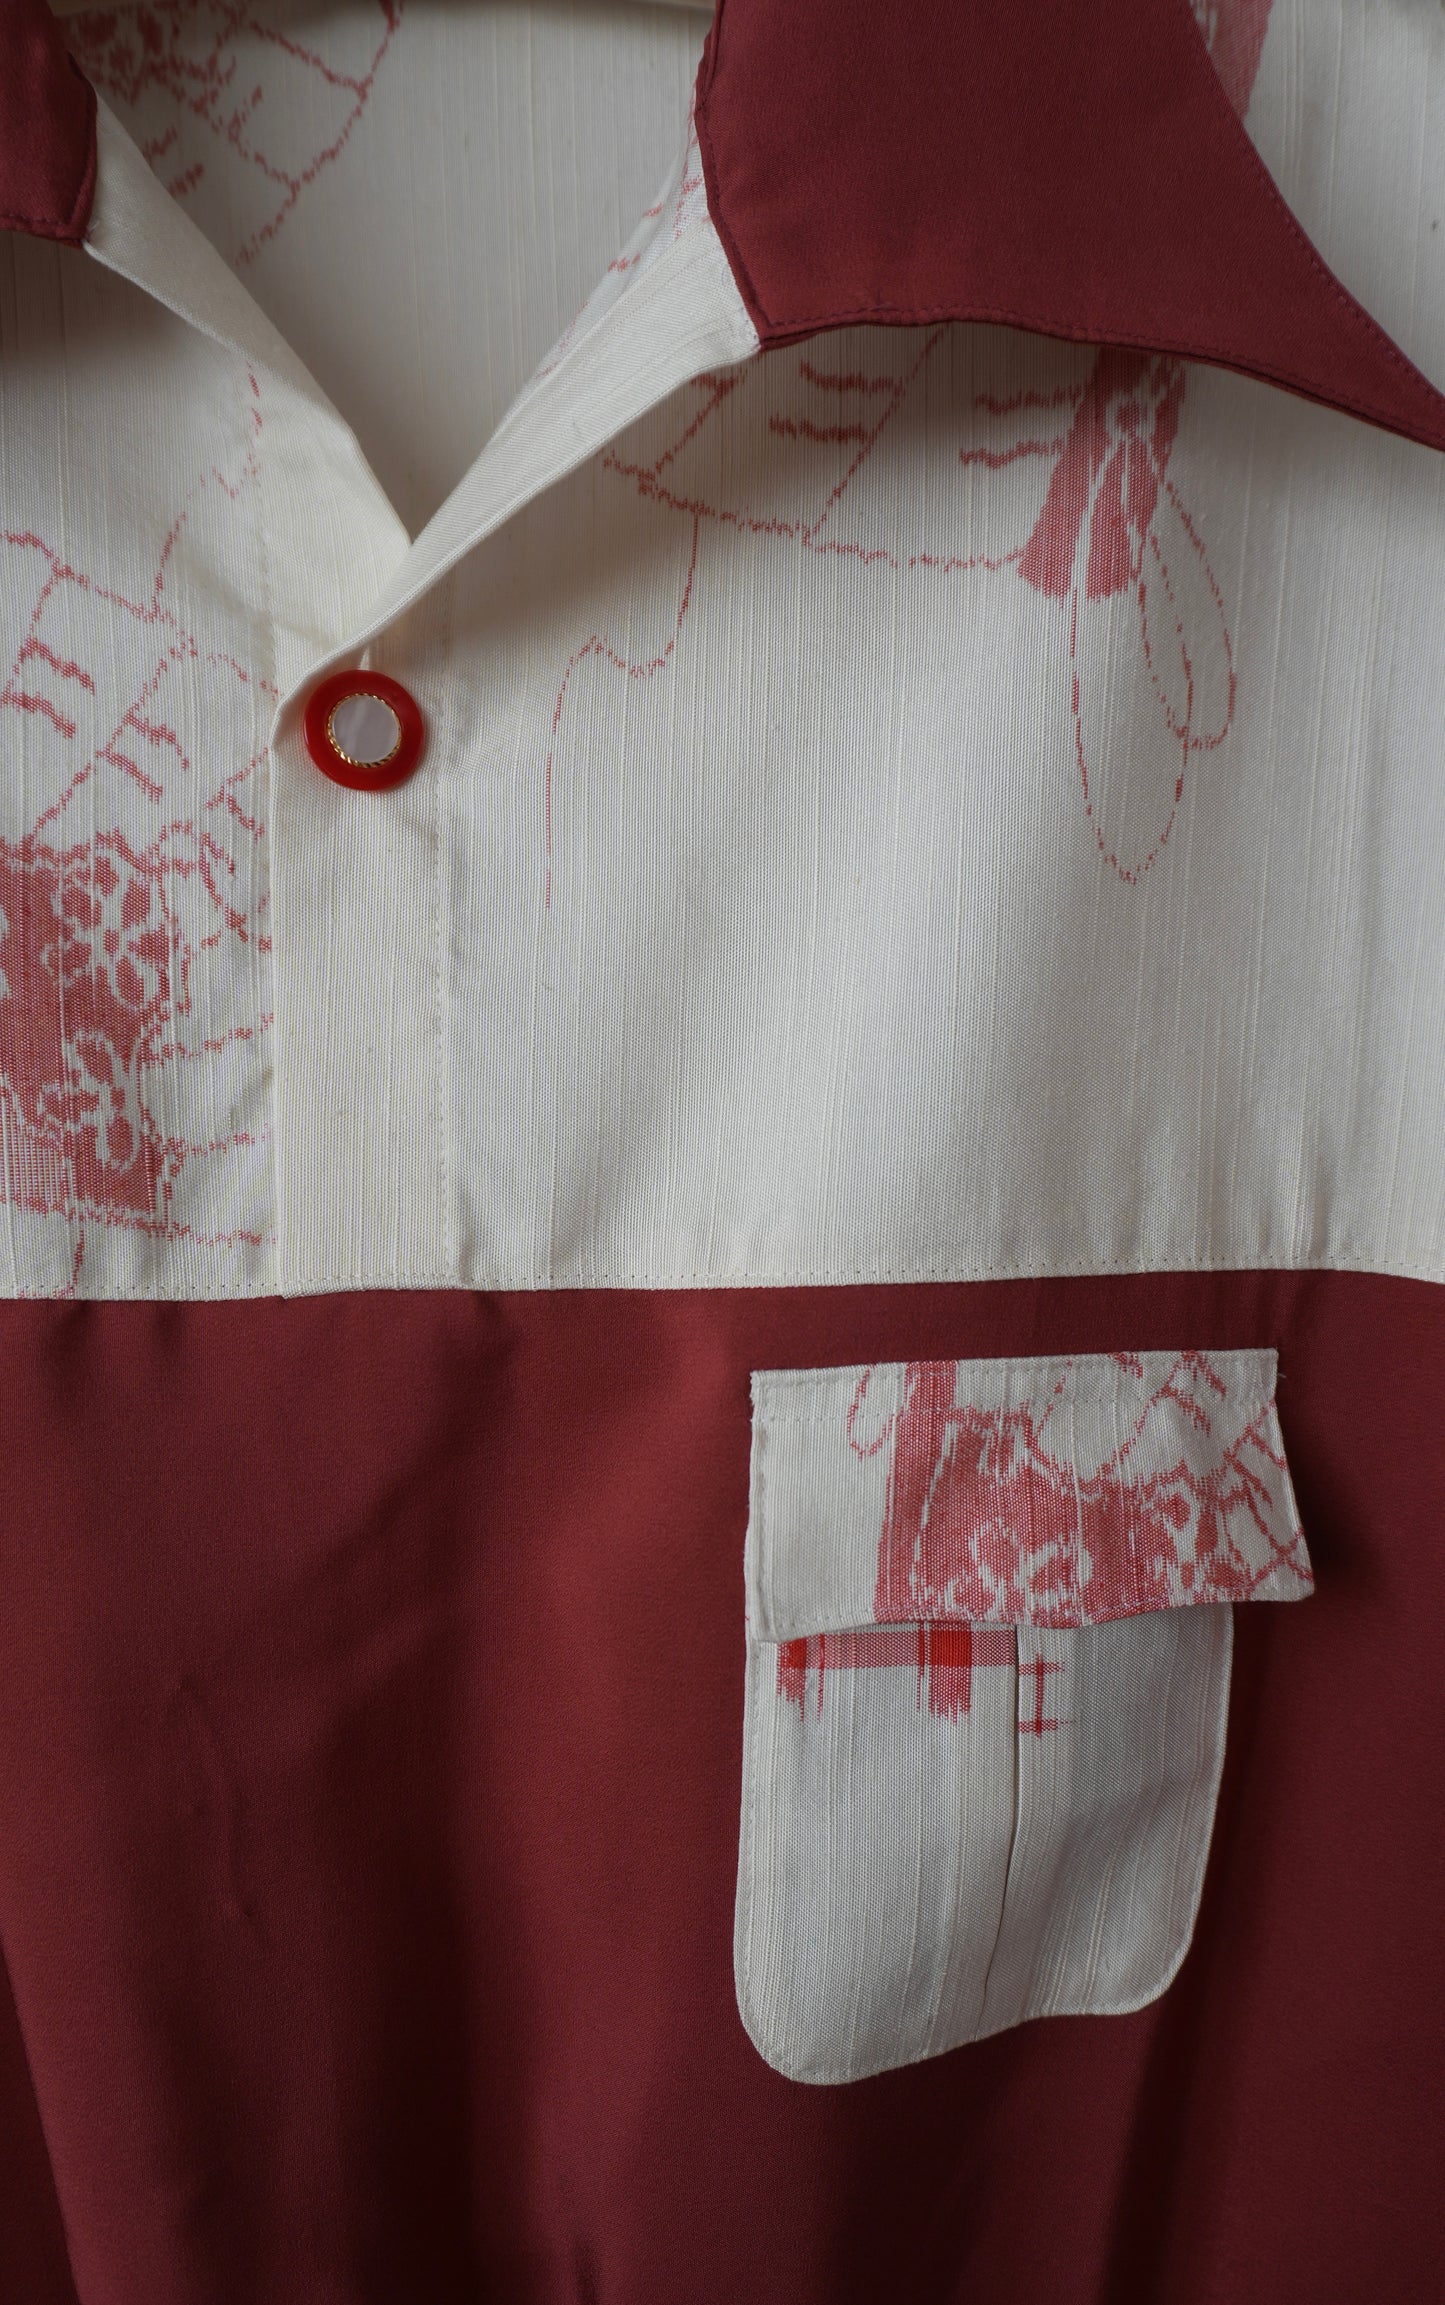 L Size Floral Silk Shirt (No. 79/100)